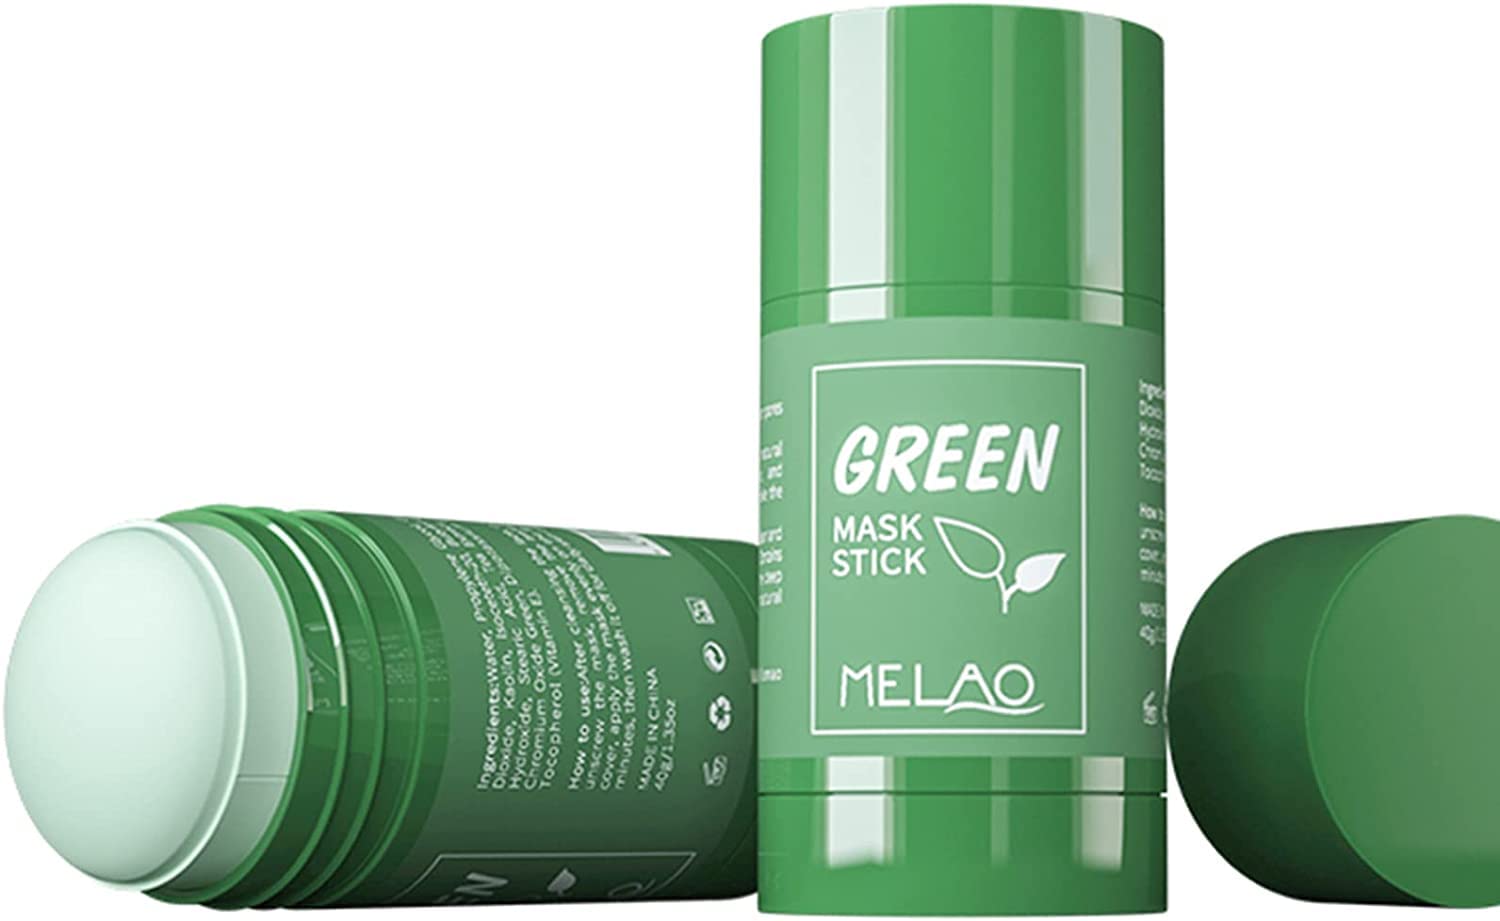 Green Tea Mask Stick, Deep Cleansing Smearing Clay Mask, Removing Blackhead  Balancing Oil And Water, Moisturizing Nourishing Skin, 40g